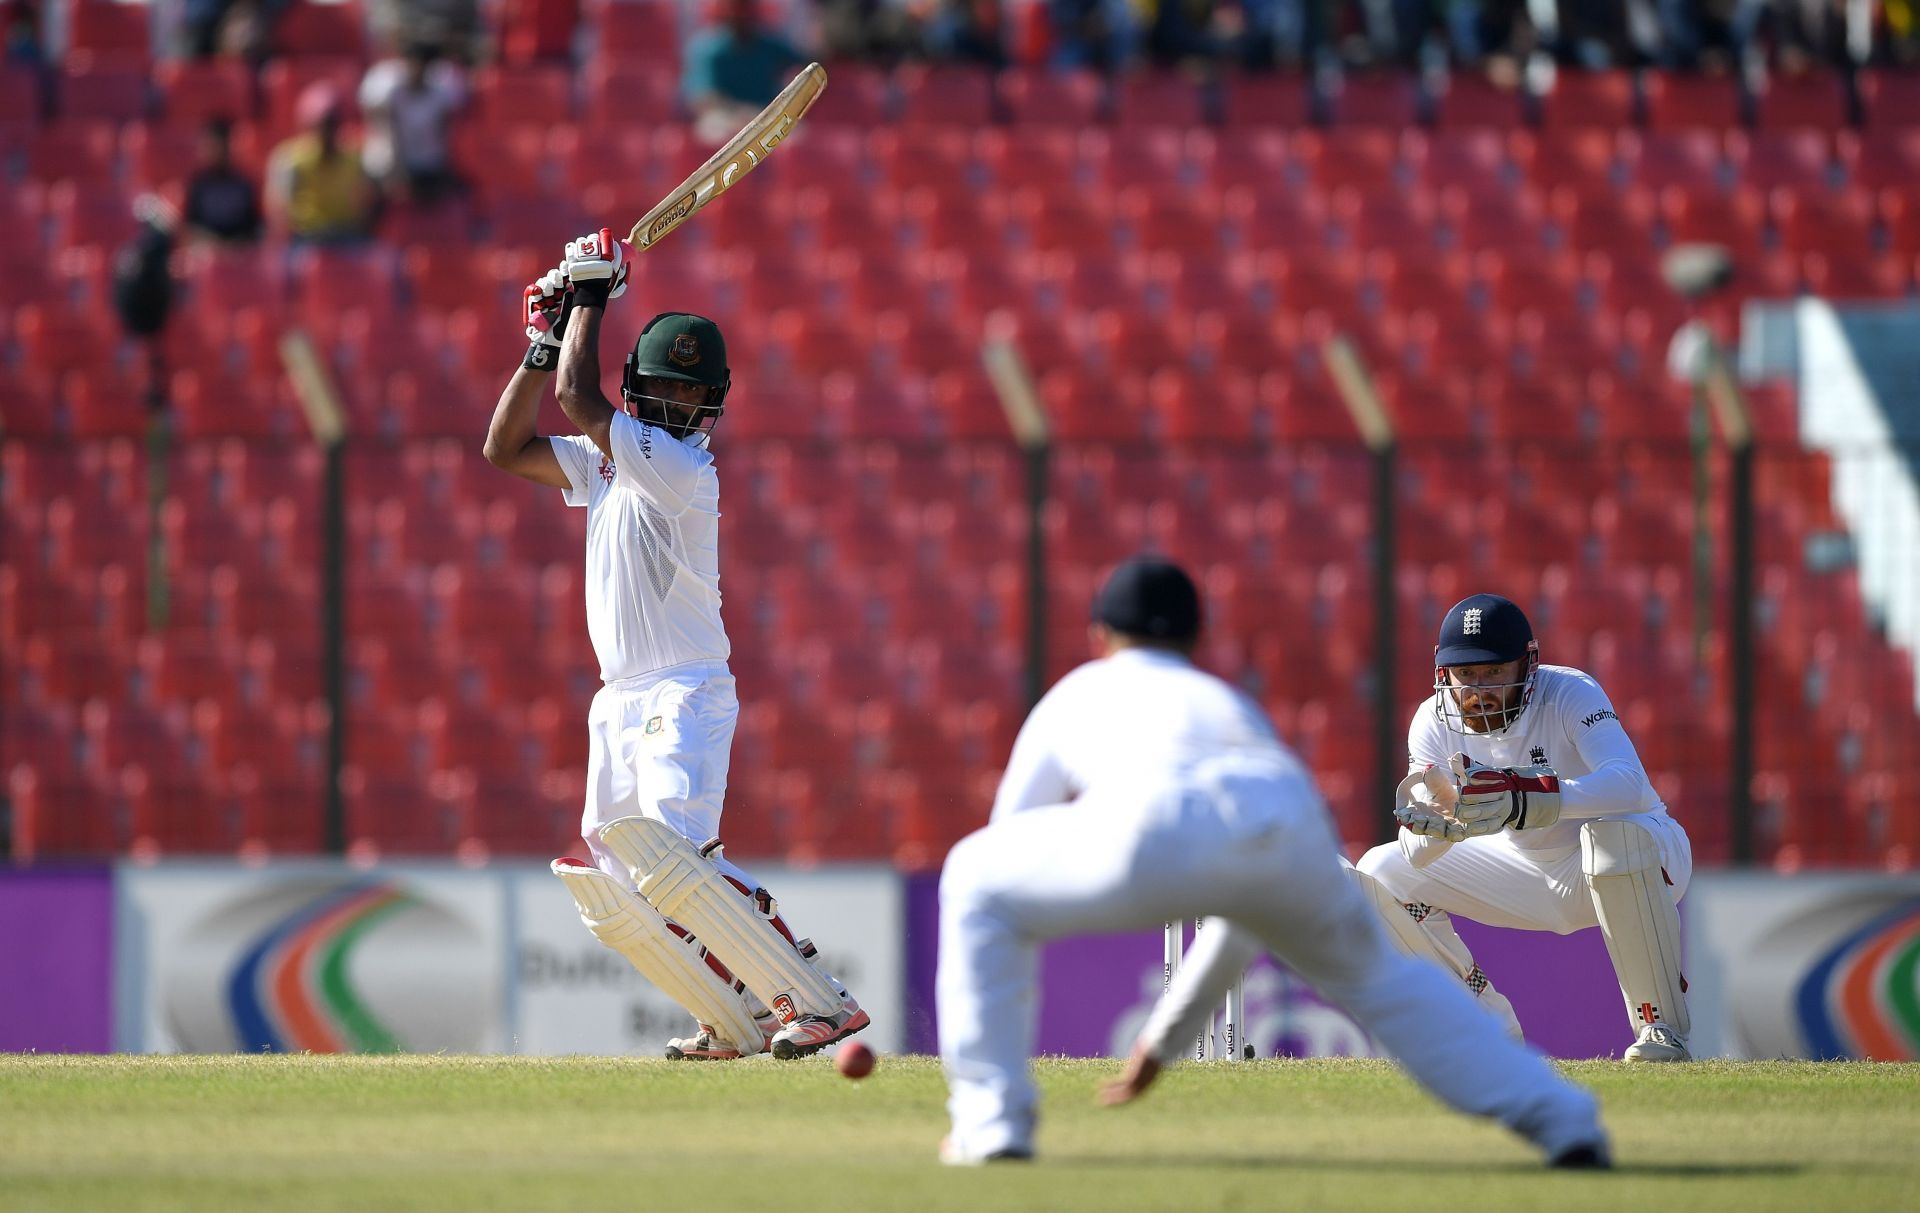 Bangladesh v England - First Test: Day Two